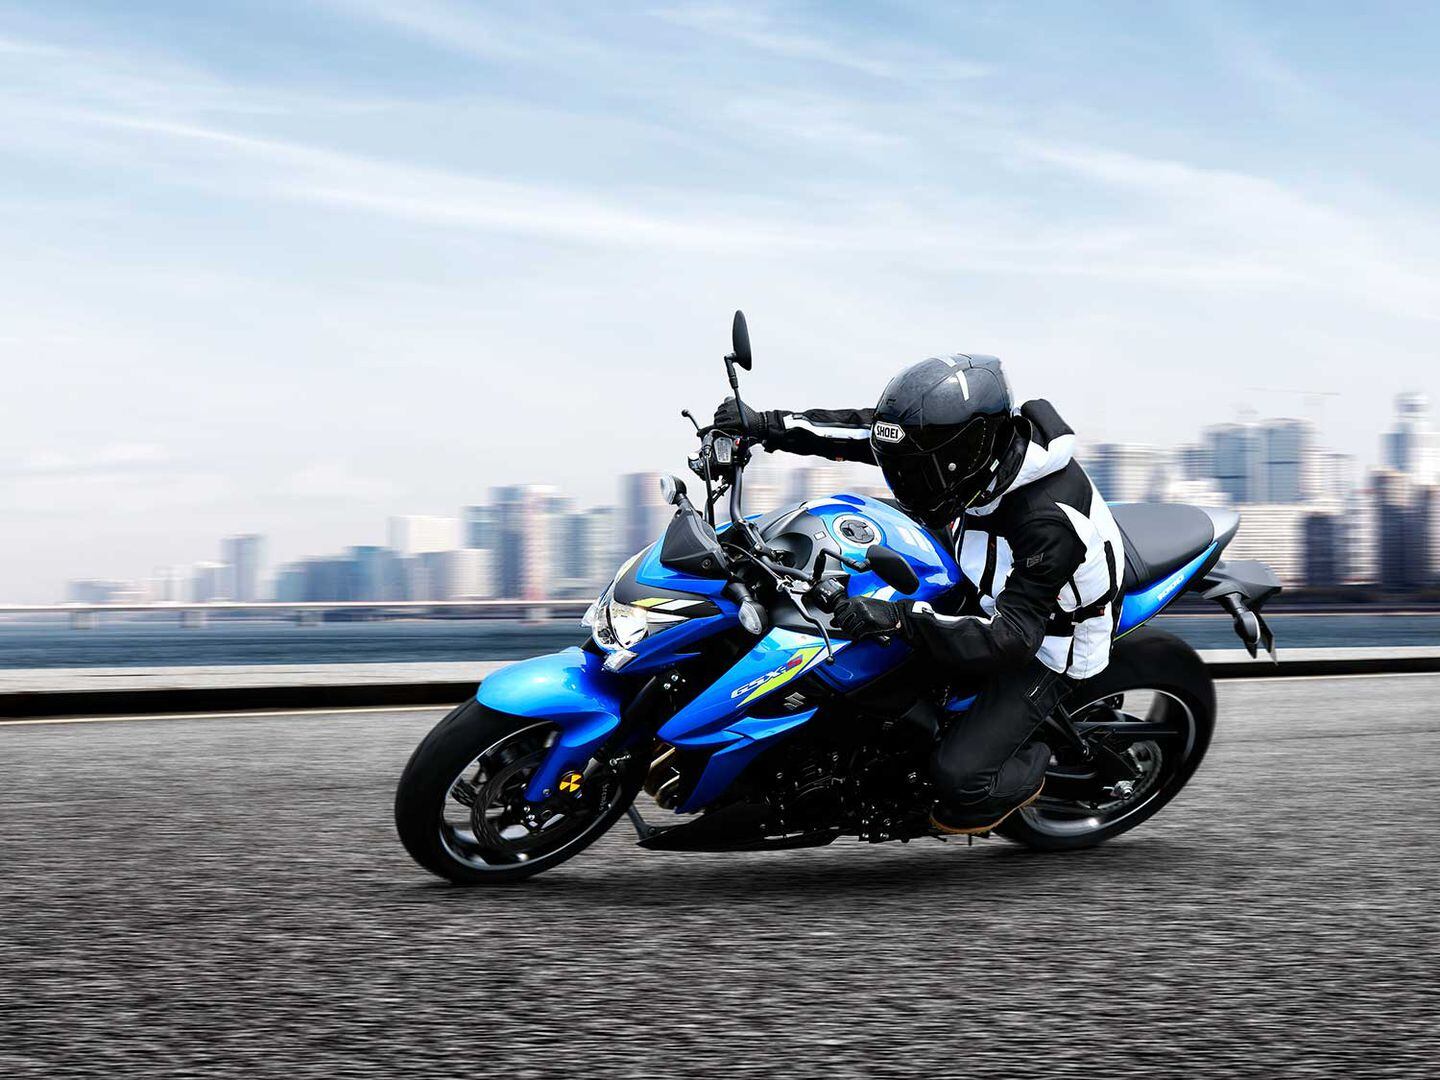 Suzuki Gsx S1000 And Gsx S1000f First Look Preview Motorcyclist